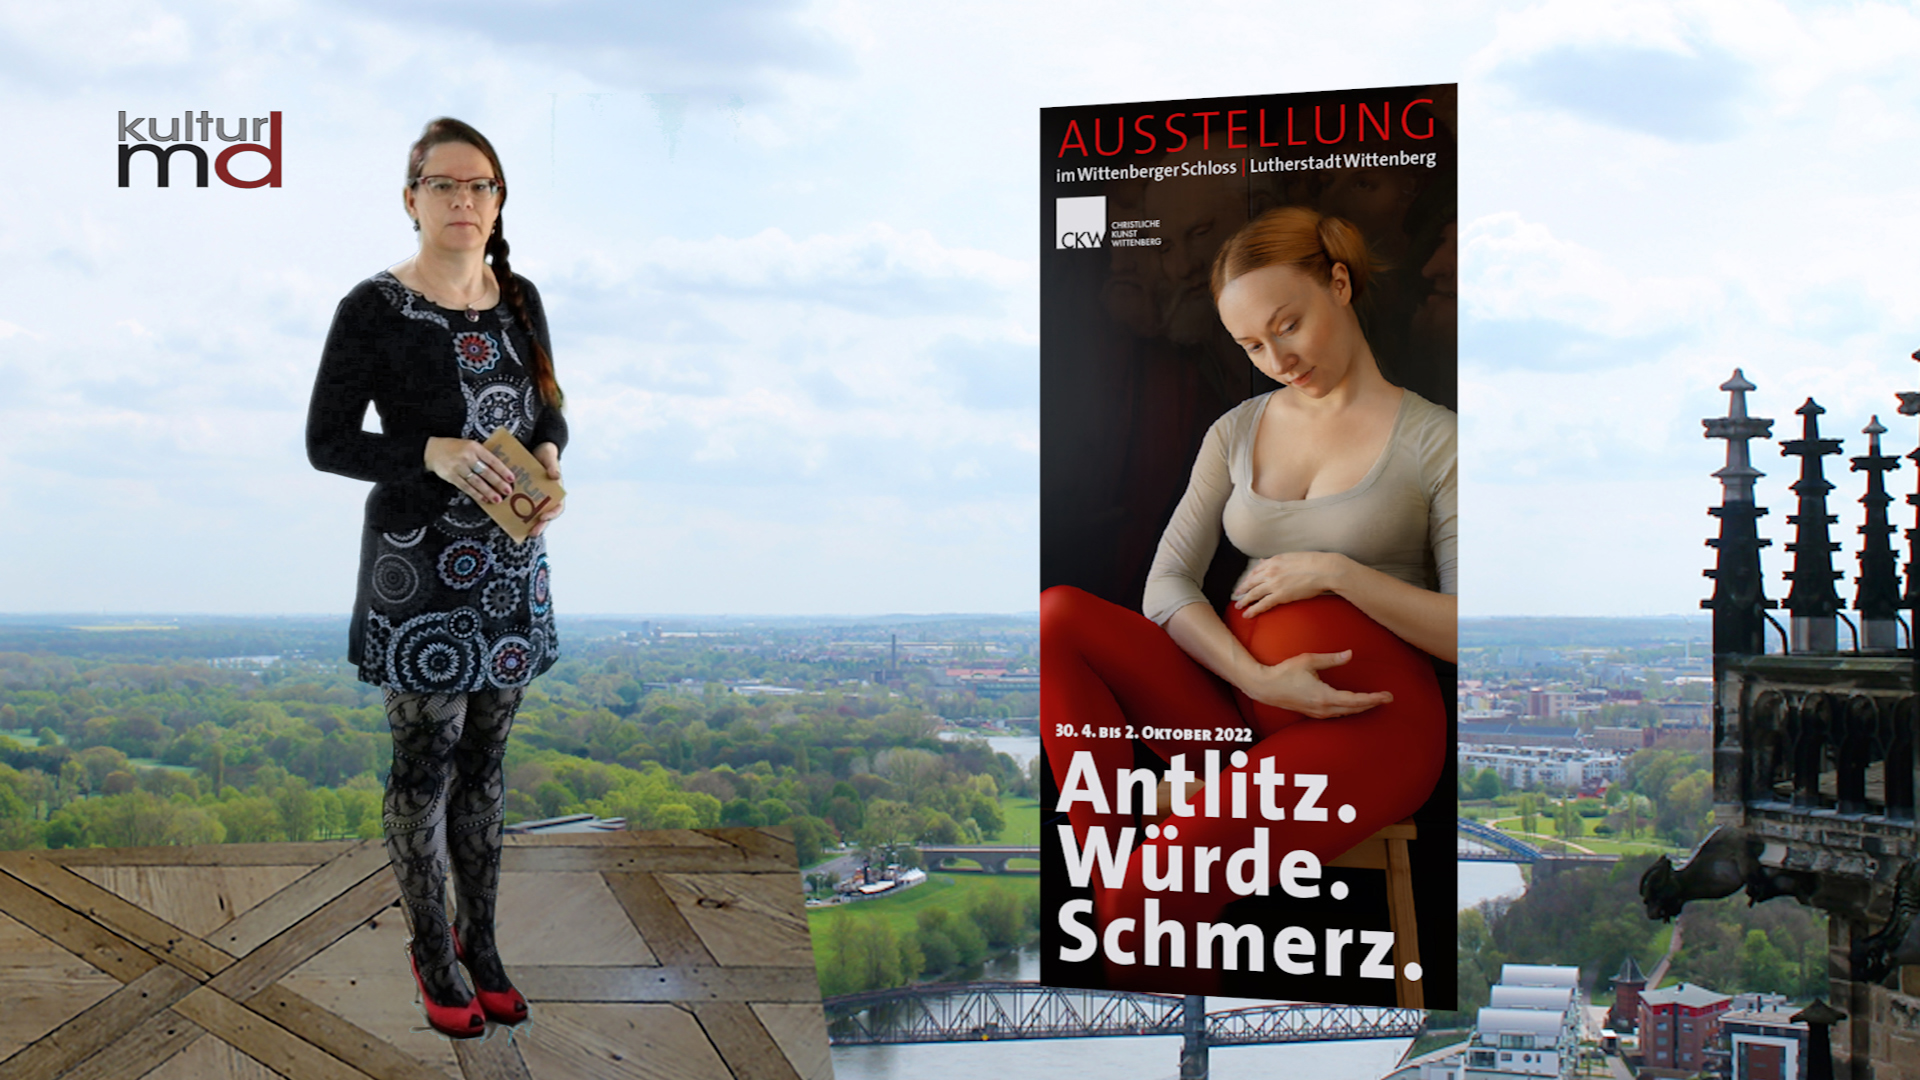 ‚Antlitz. Würde. Schmerz.‘ Kunstausstellung im Wittenberger Schloss bis Ende September 2022